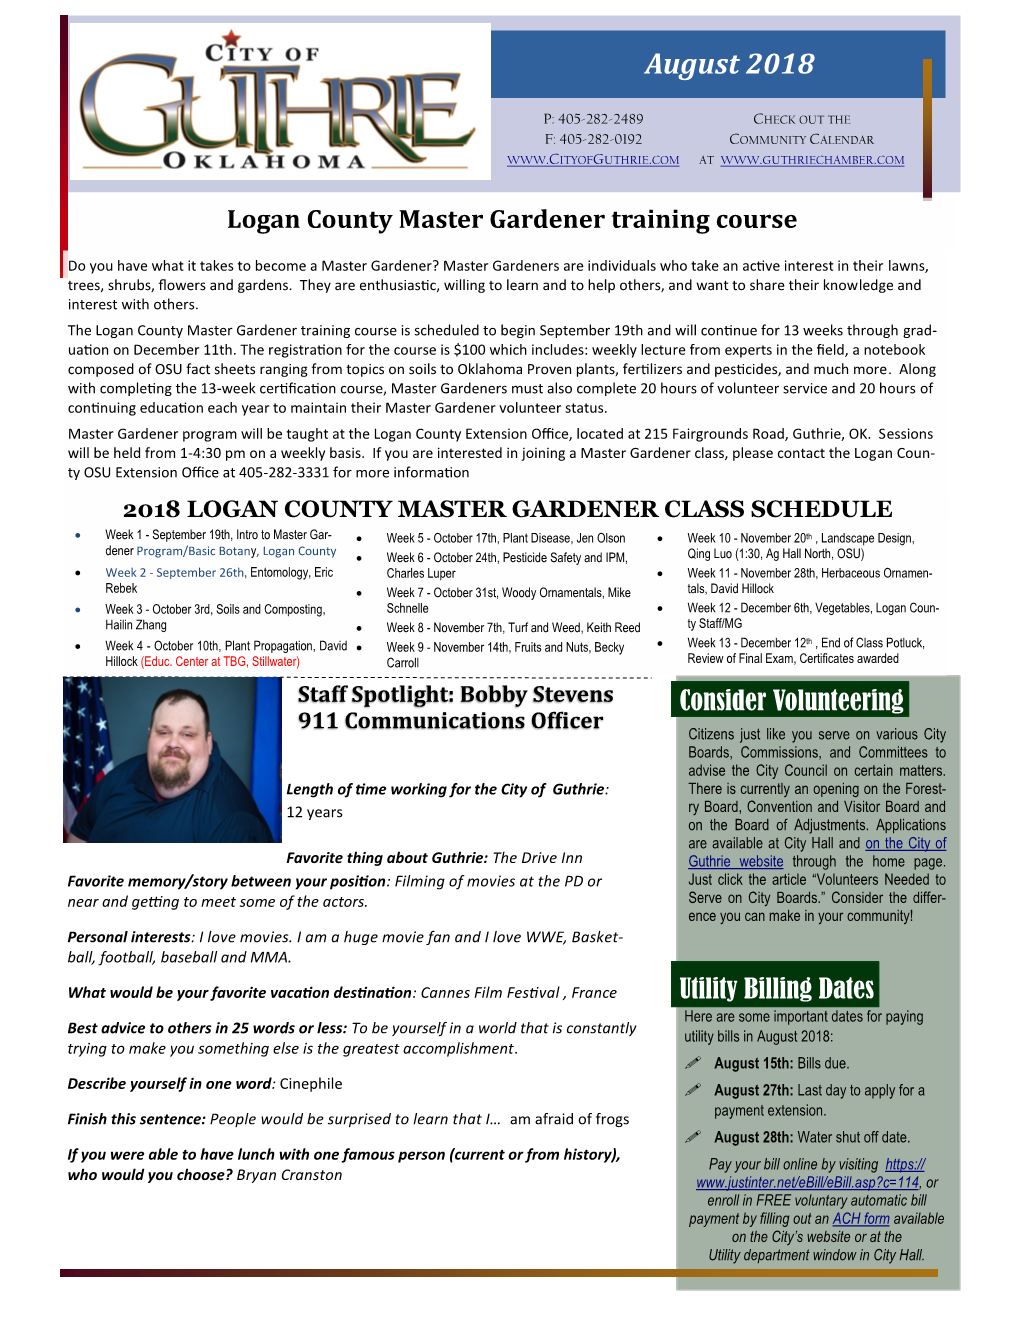 Logan County Master Gardener Training Course